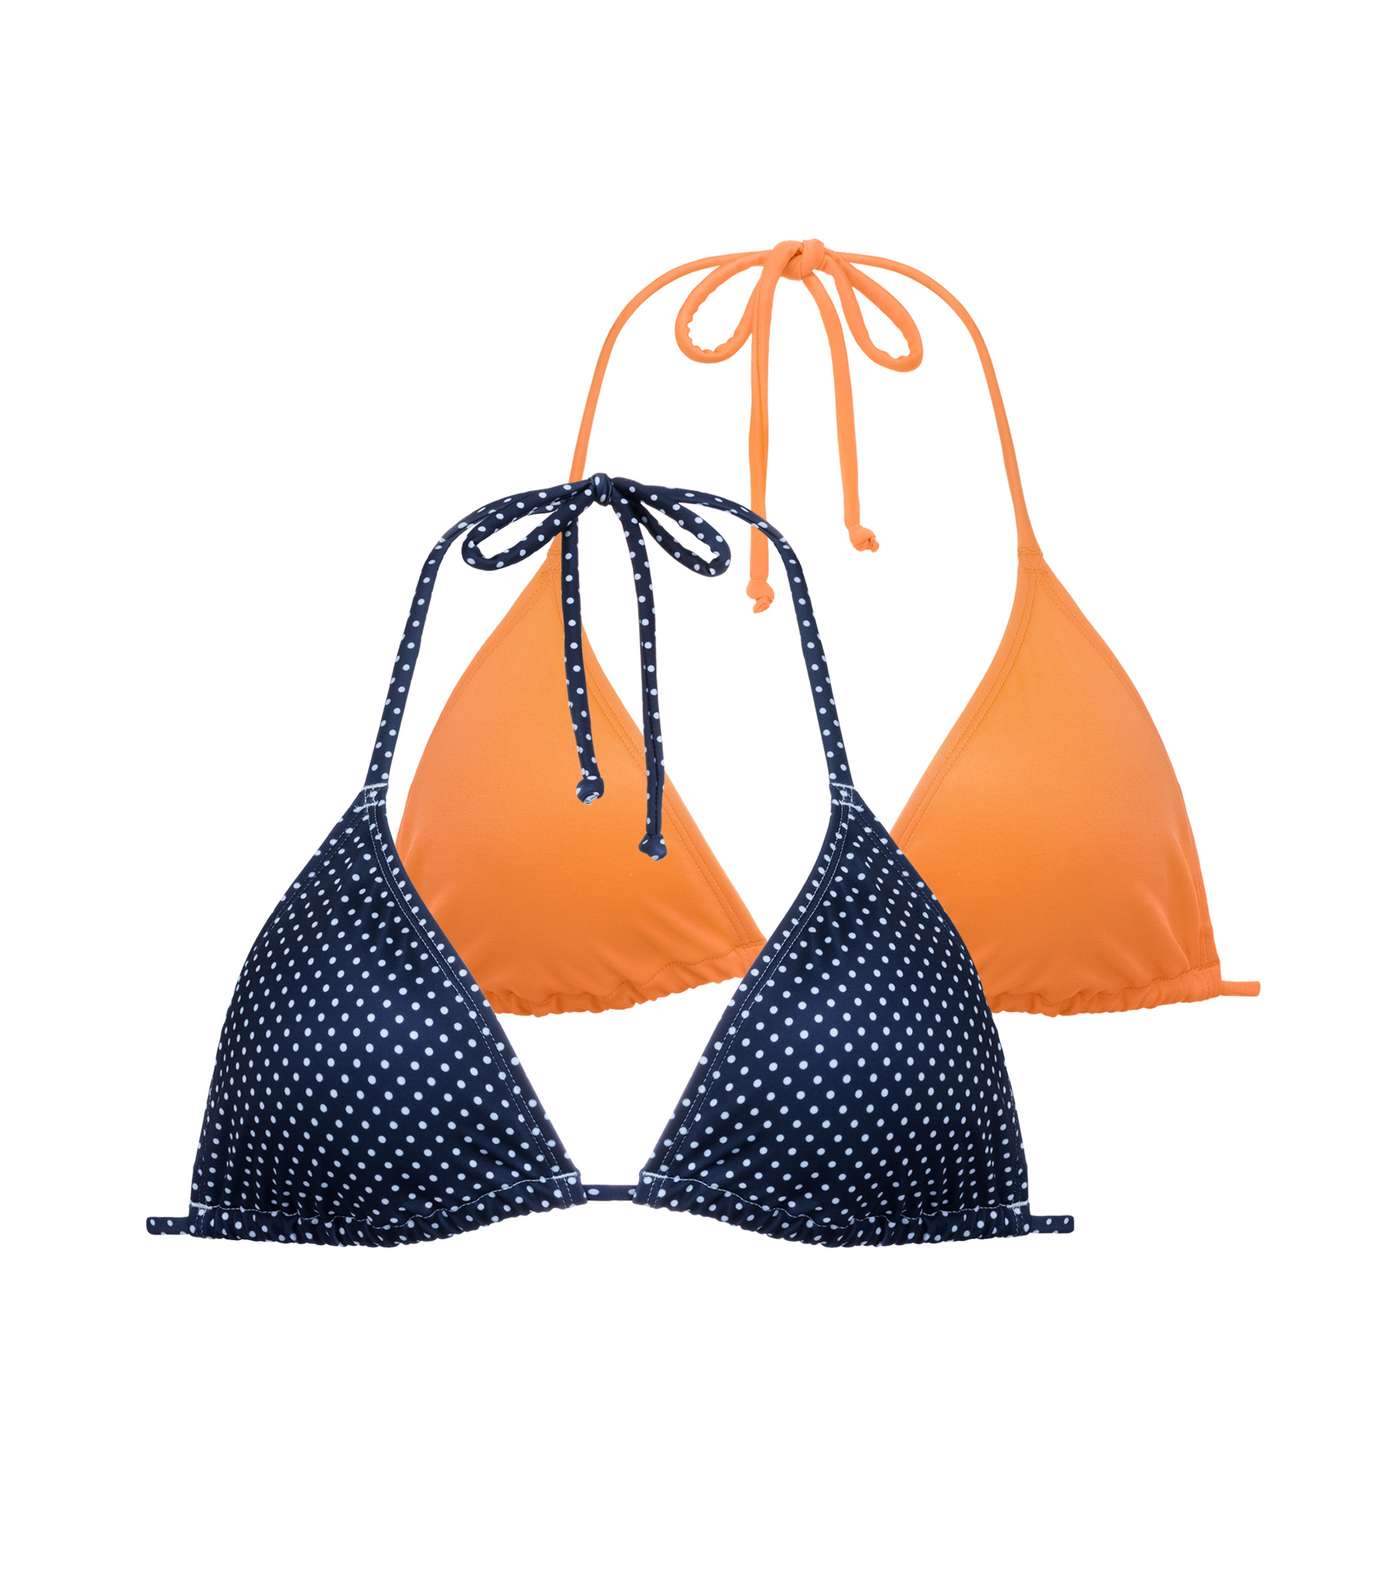 2 Pack Dorina Navy Spot and Orange Triangle Bikini Tops Image 5